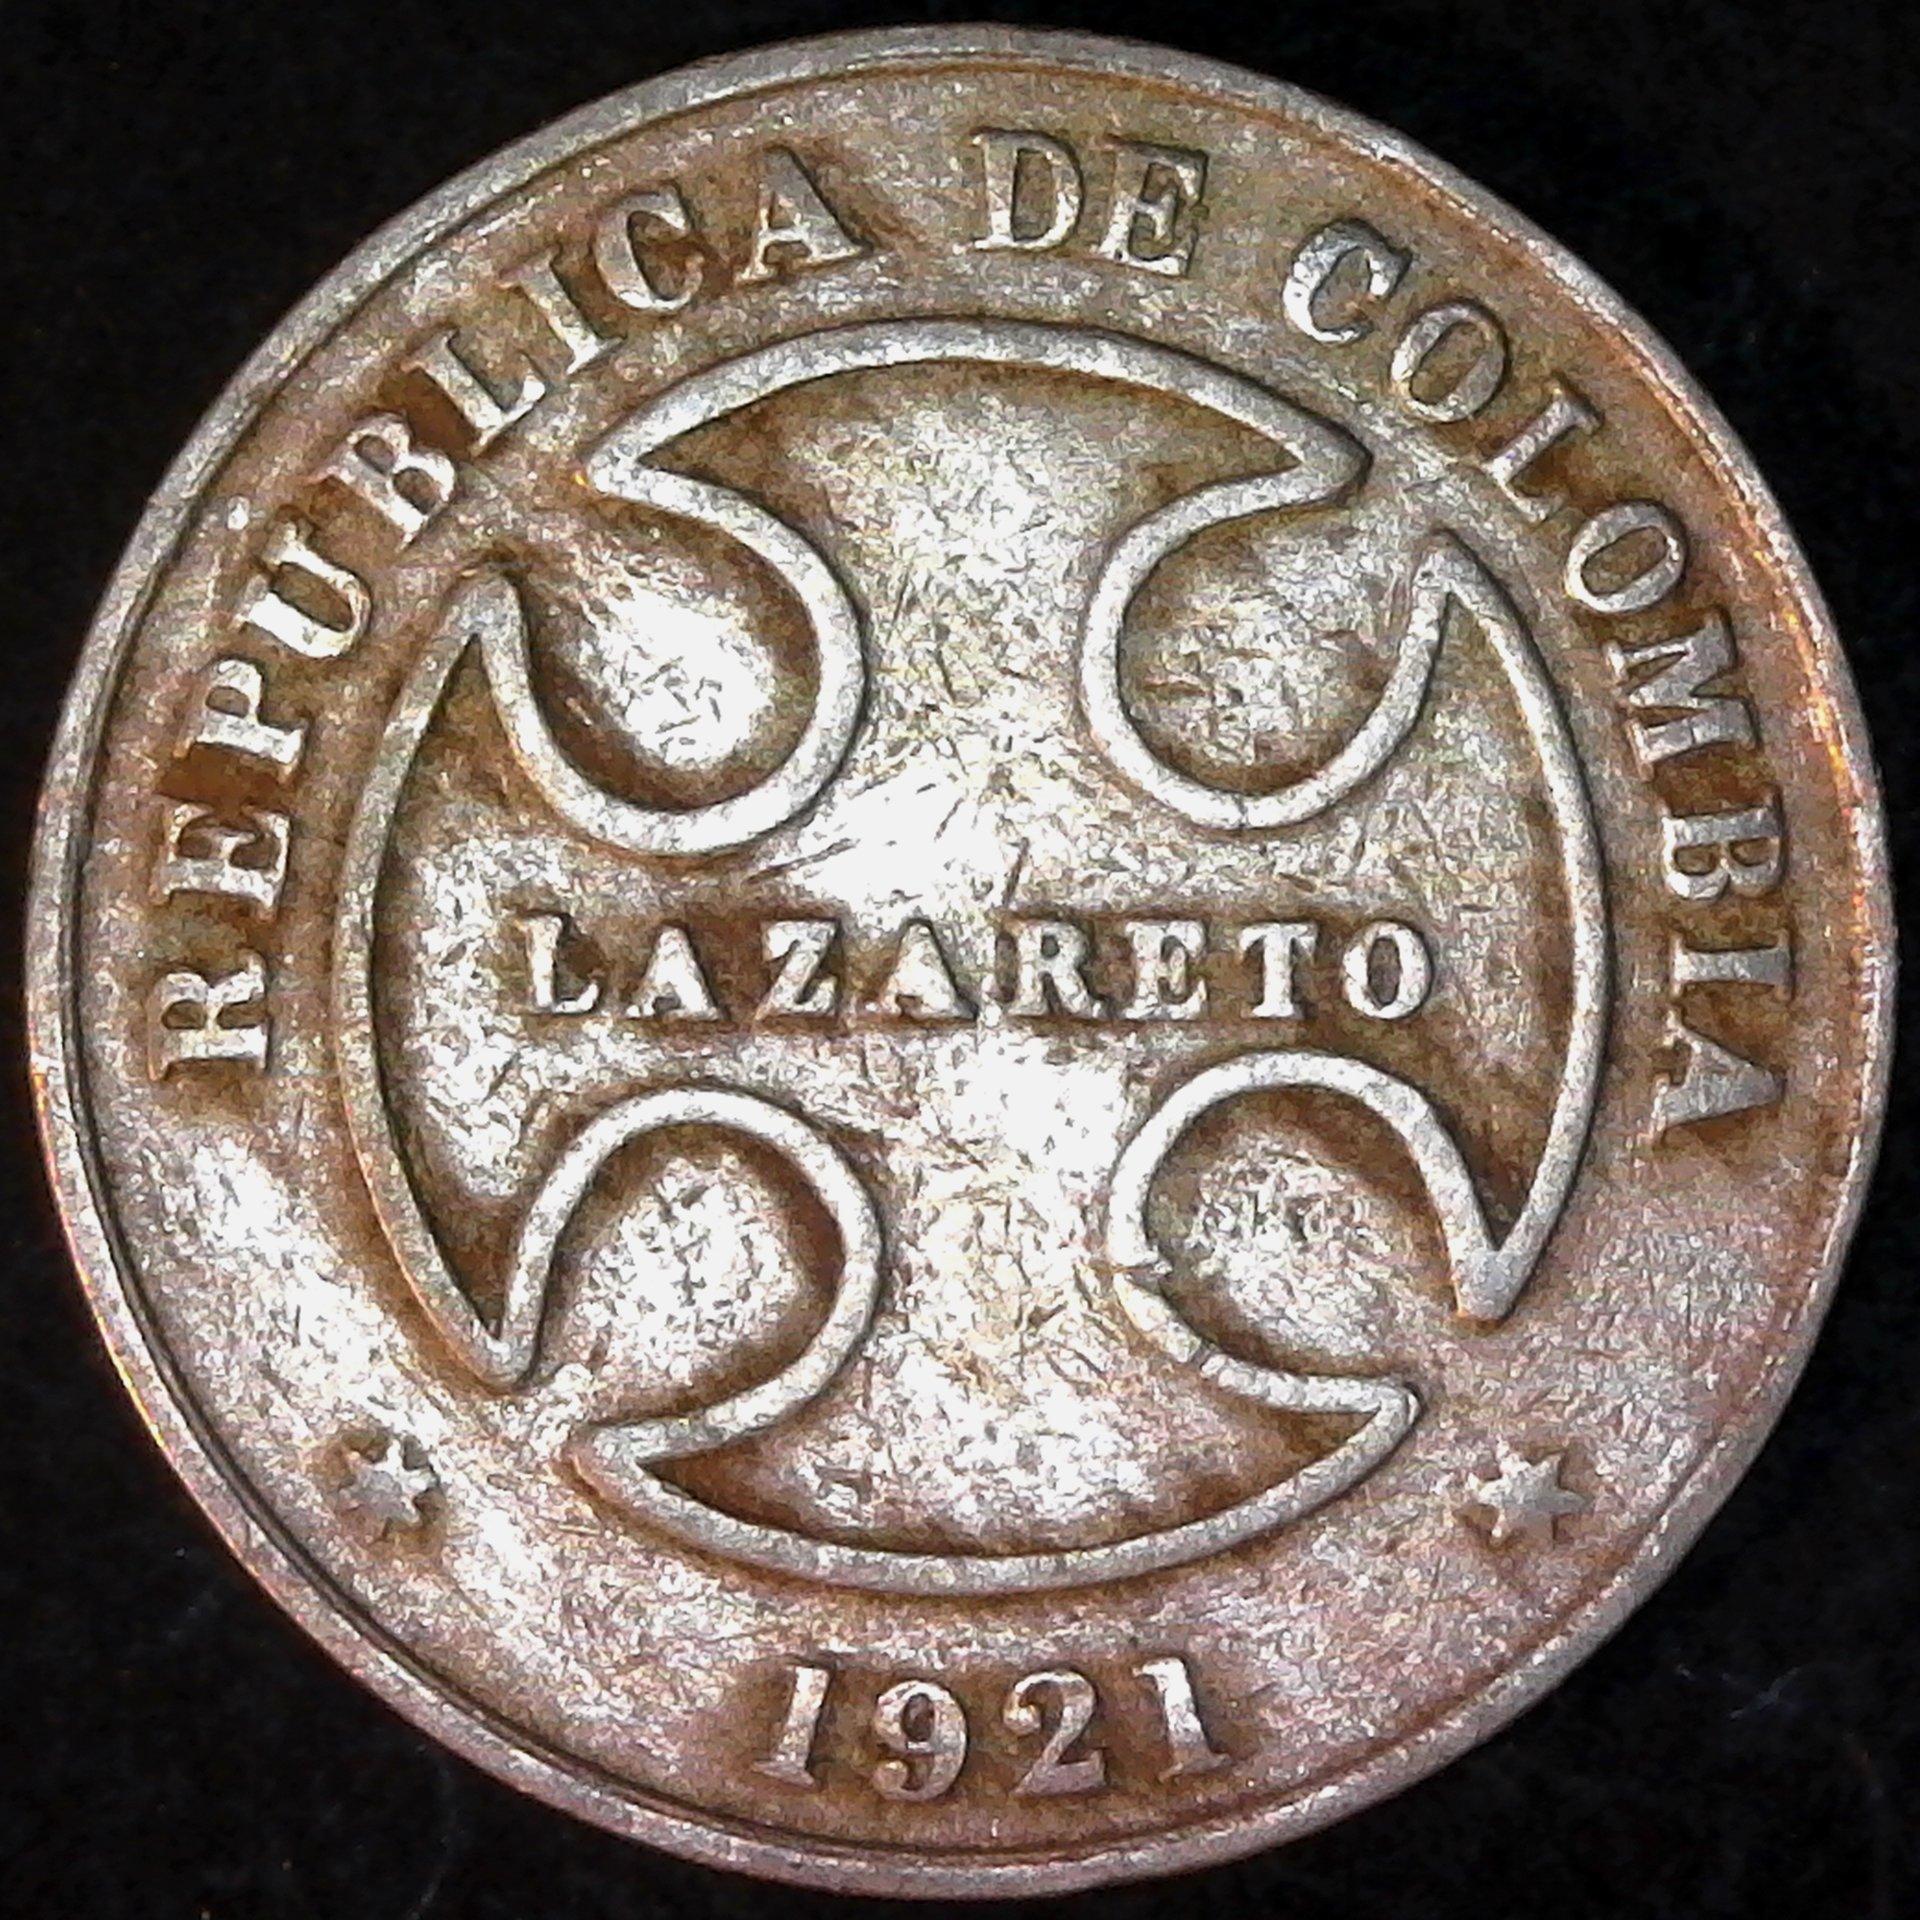 Colombia Lazareto 50 Centavos 1921 obv.jpg